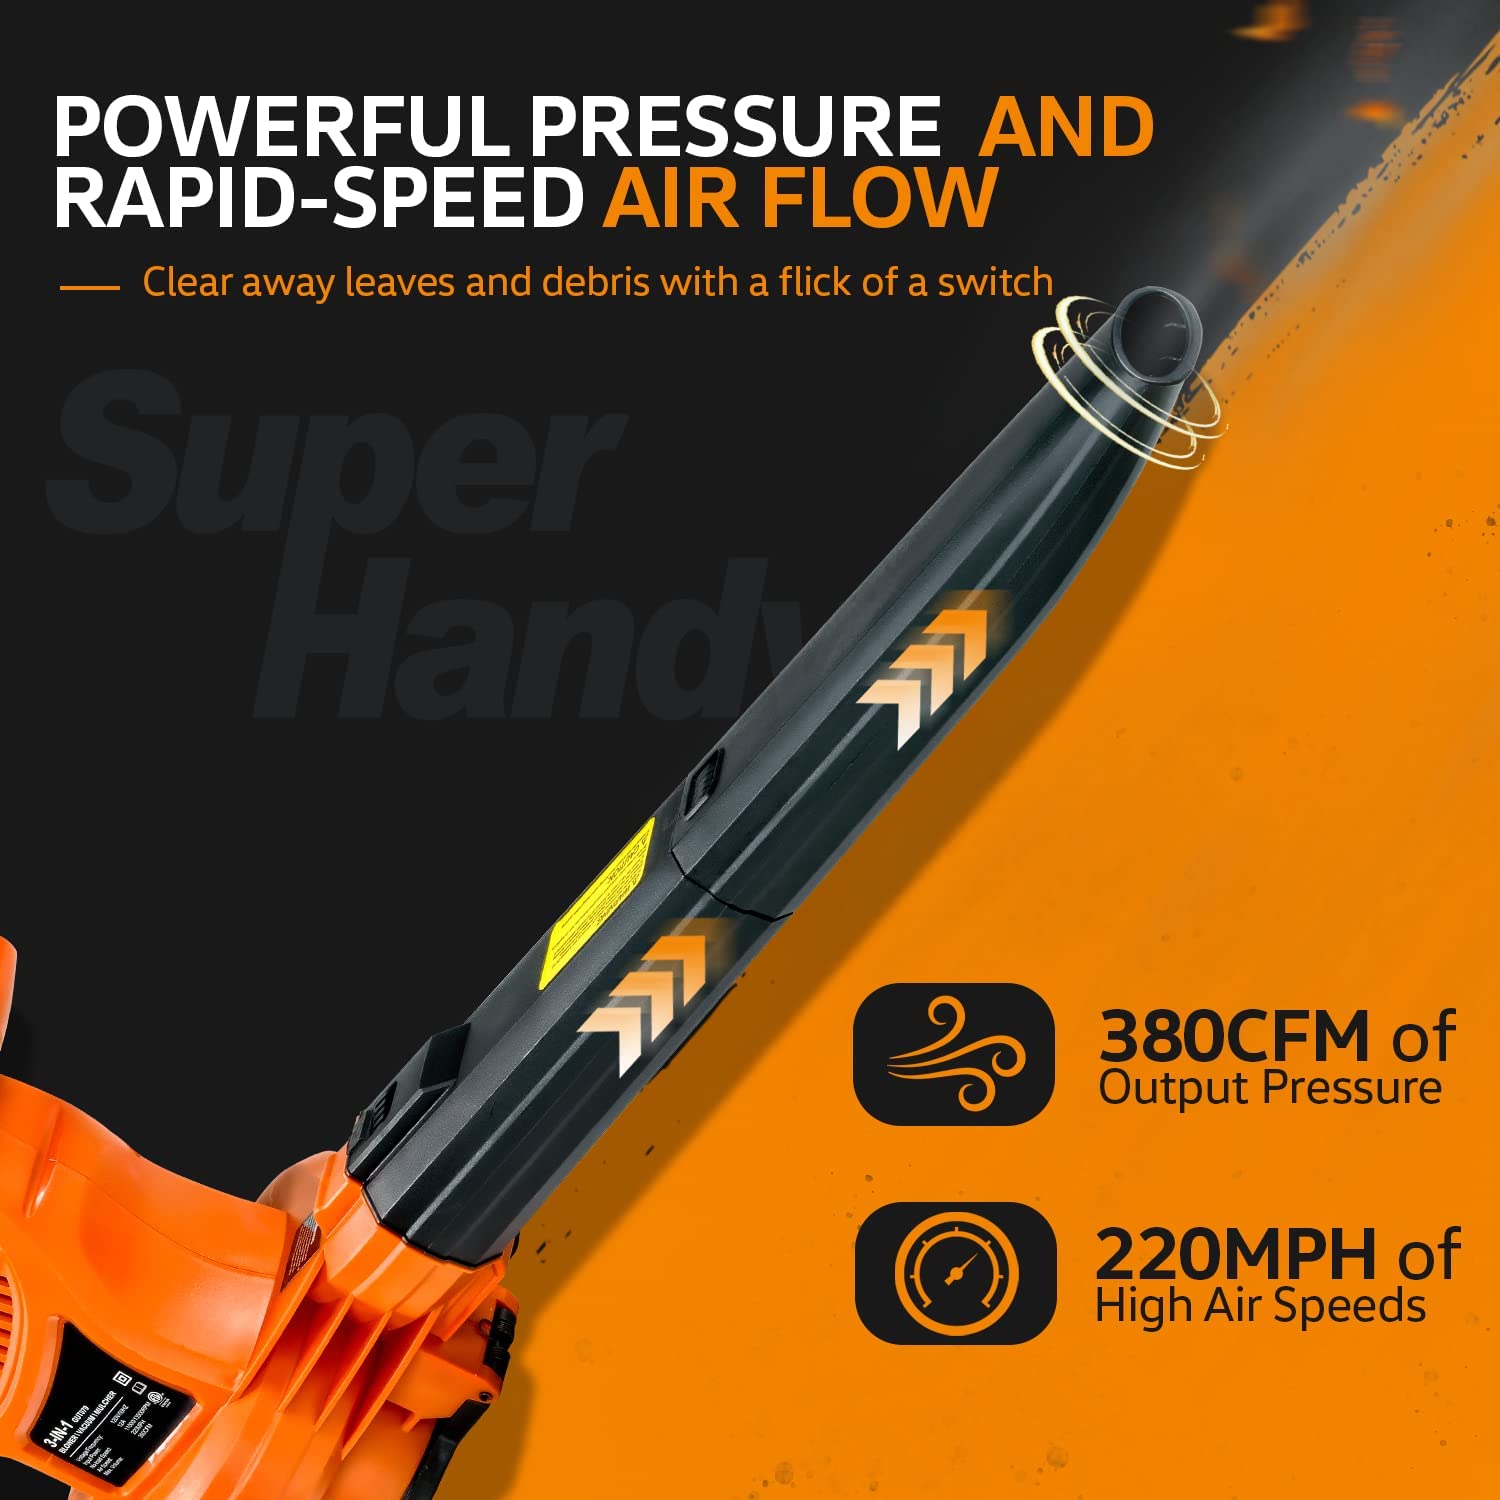 12 Amp High Performance Blower/Vacuum/Mulcher